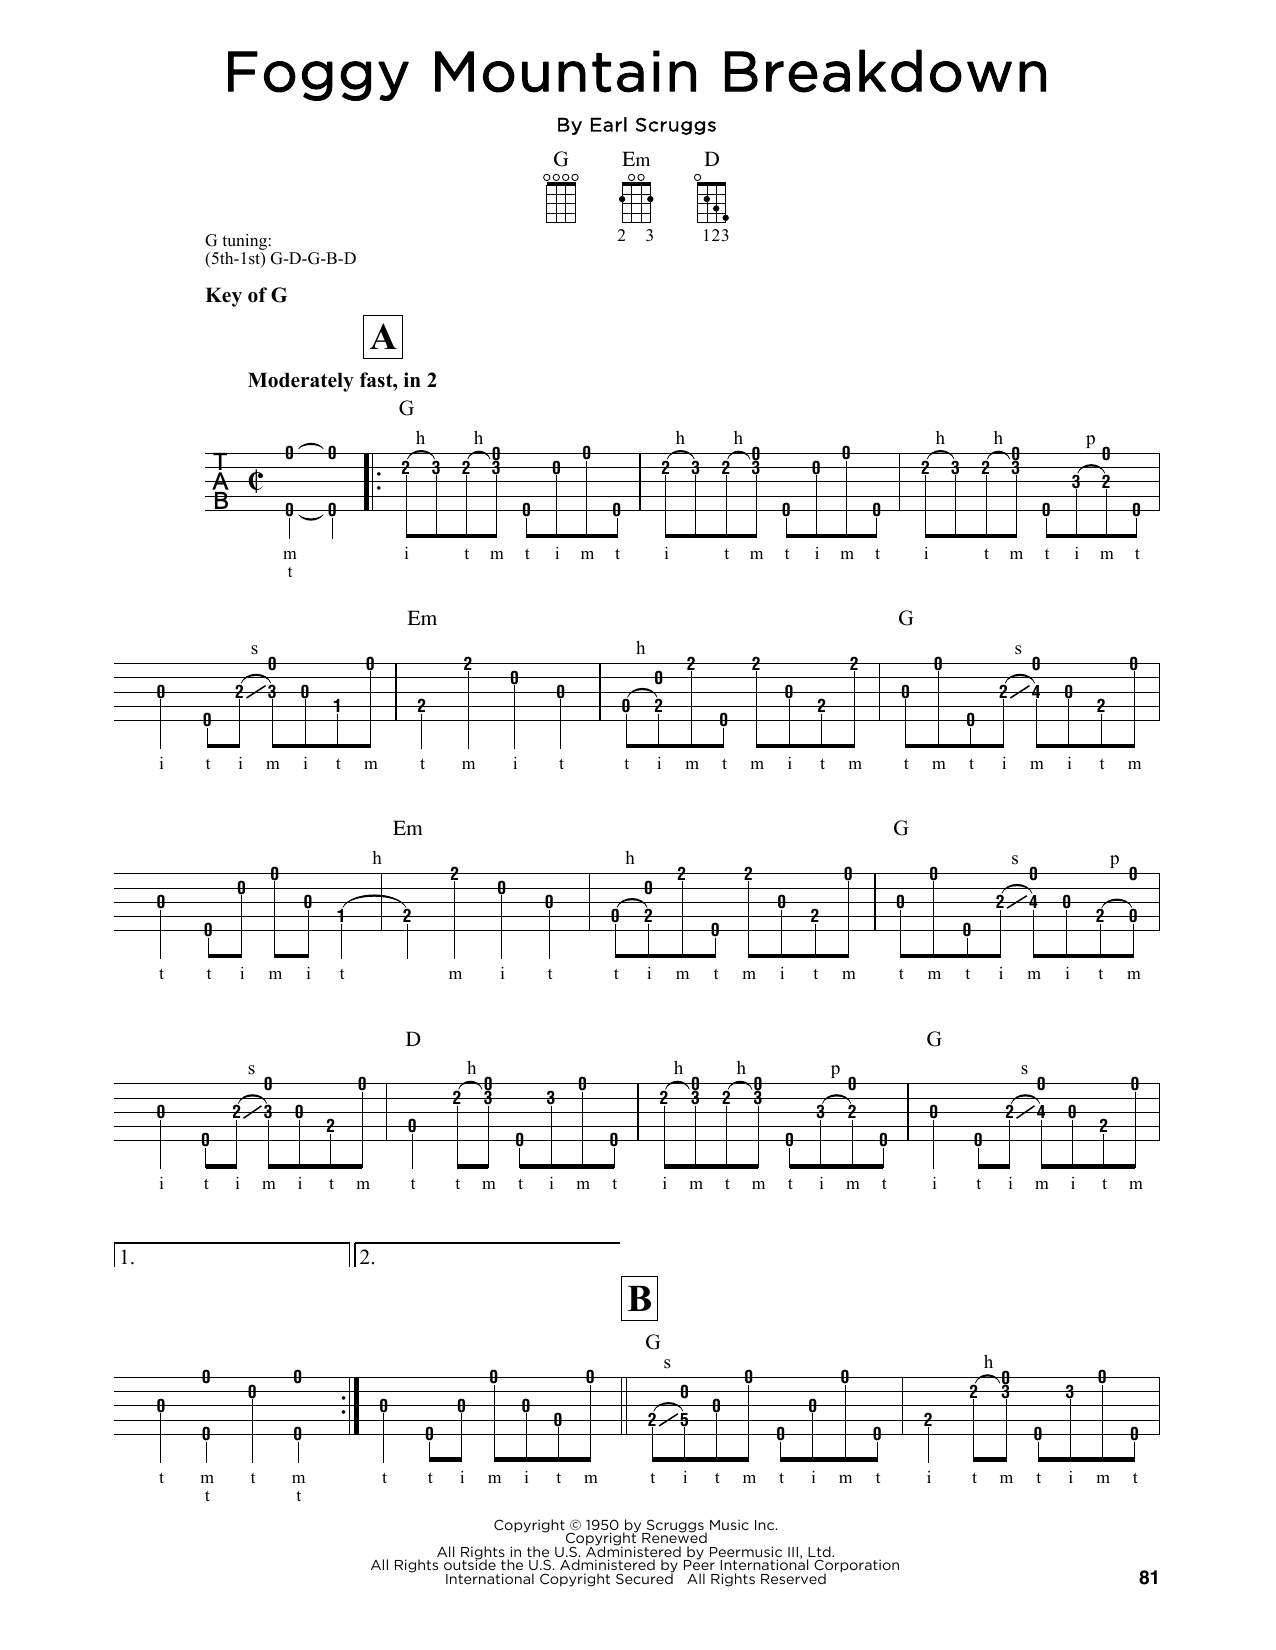 Download Lester Flatt & Earl Scruggs Foggy Mountain Breakdown Sheet Music and learn how to play Banjo PDF digital score in minutes